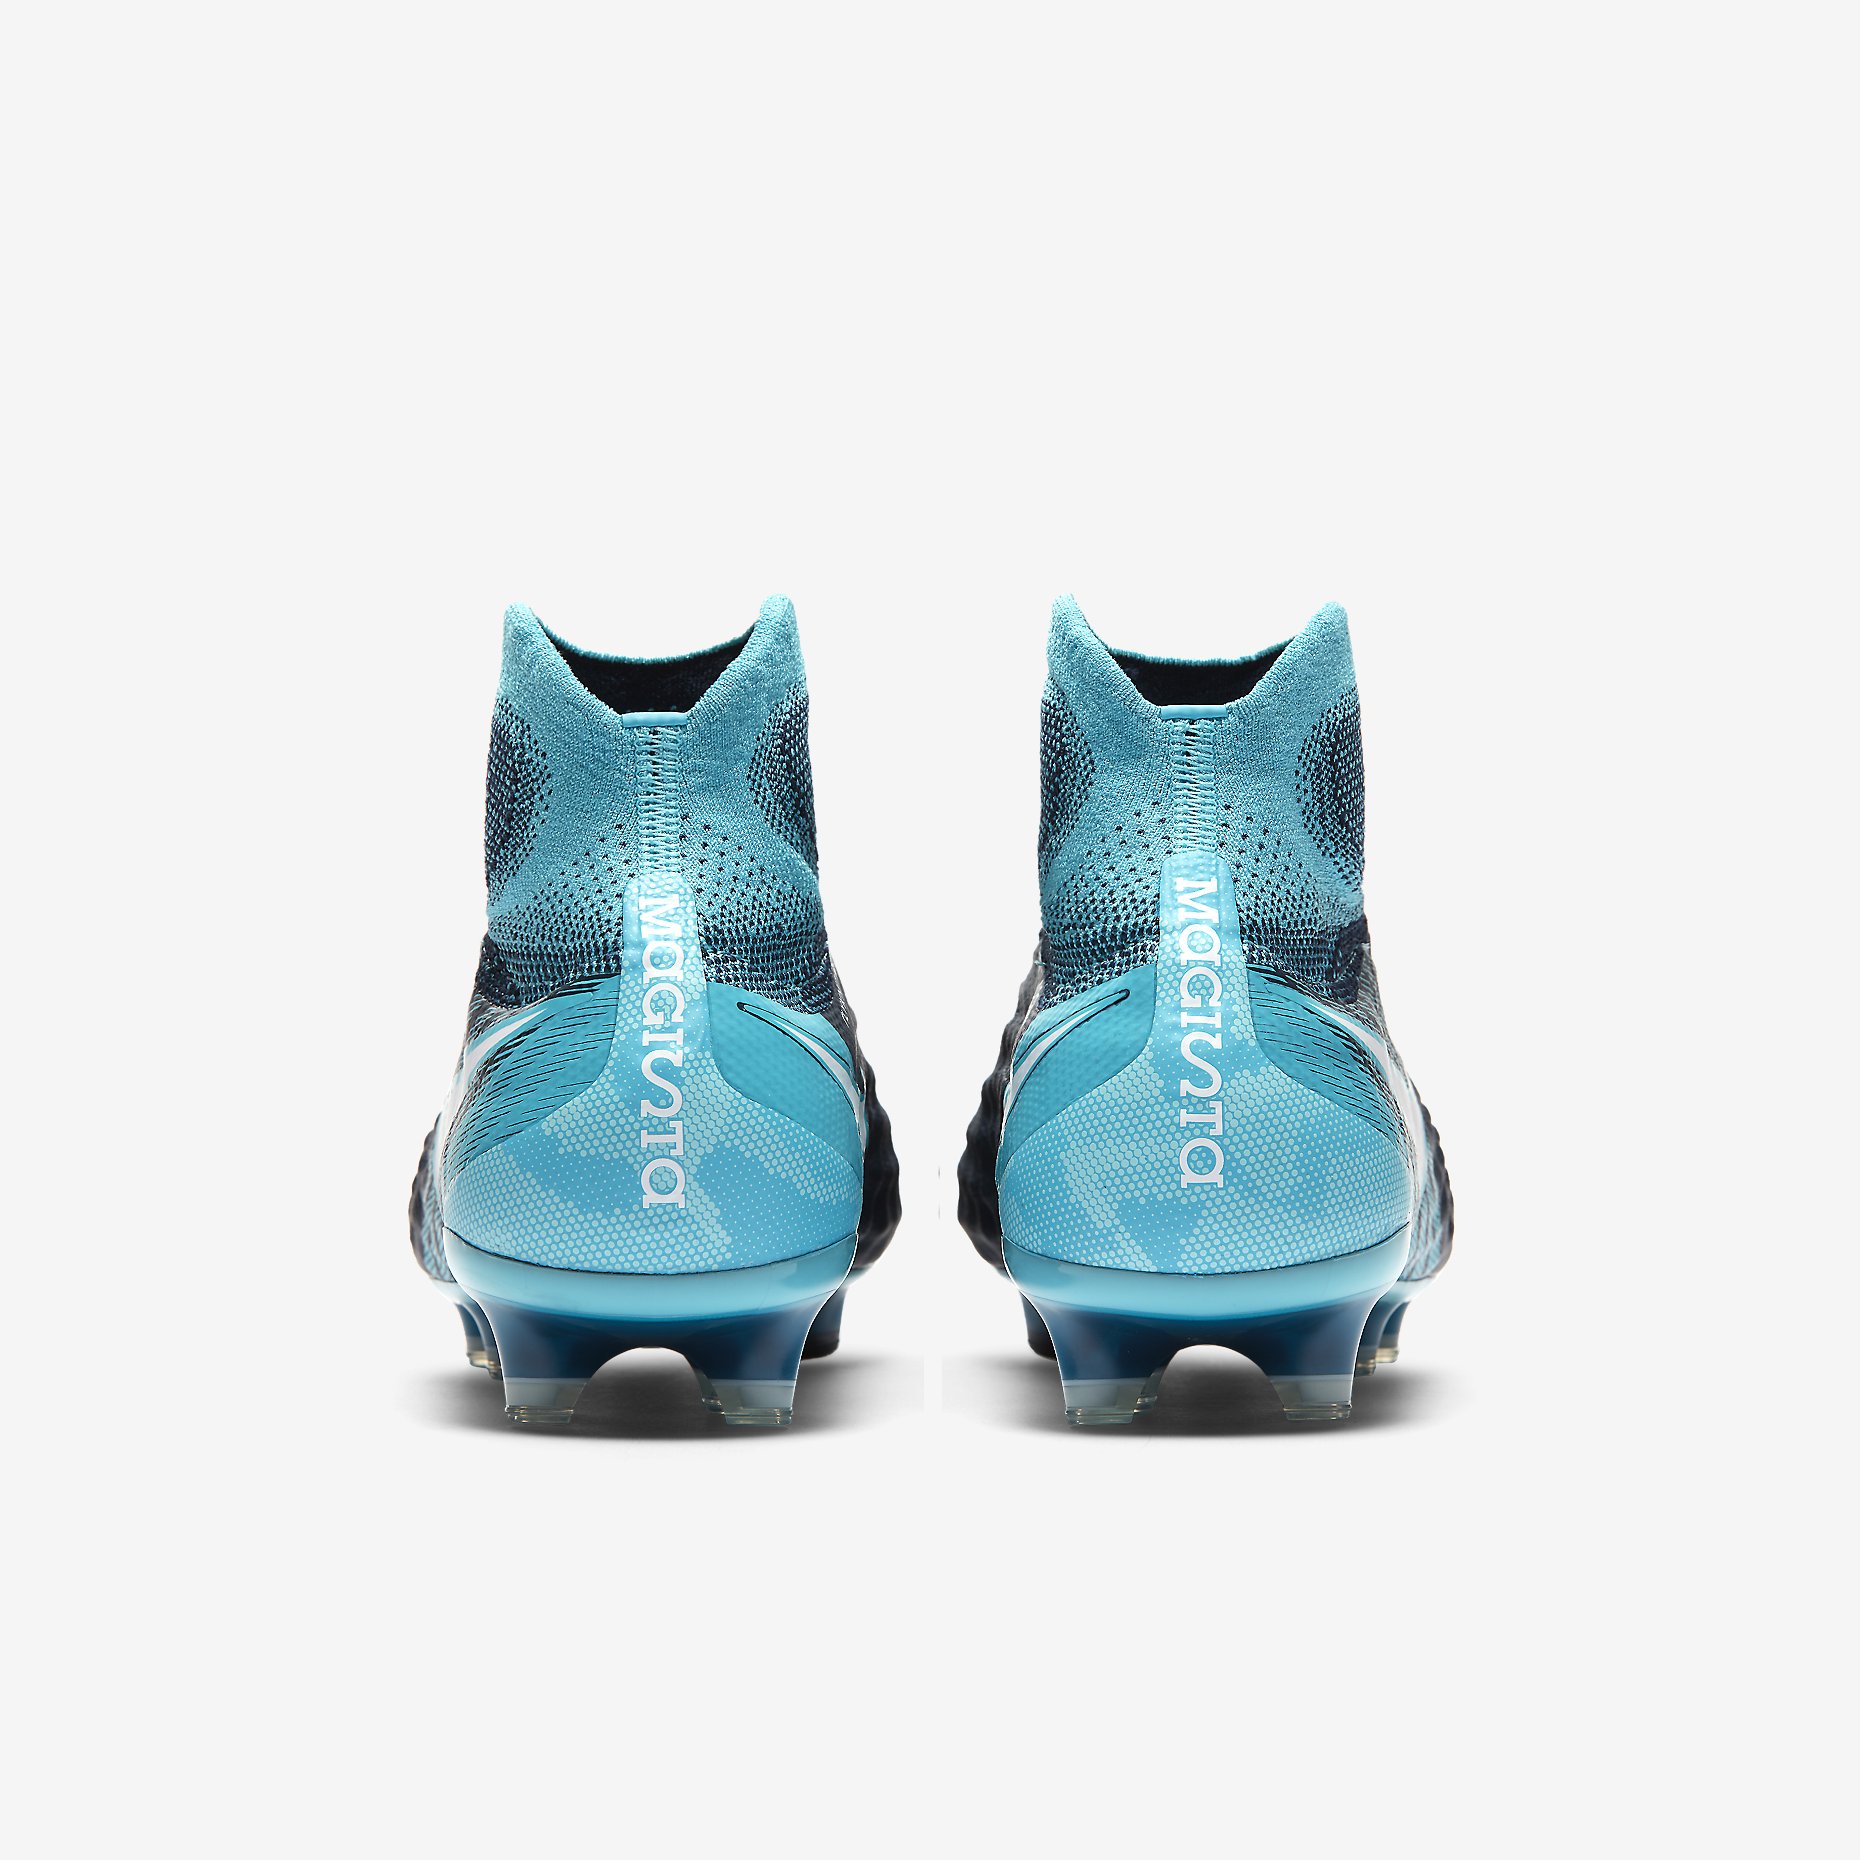 Football De Hommes Nike Opus Ii Magista Chaussure Fg